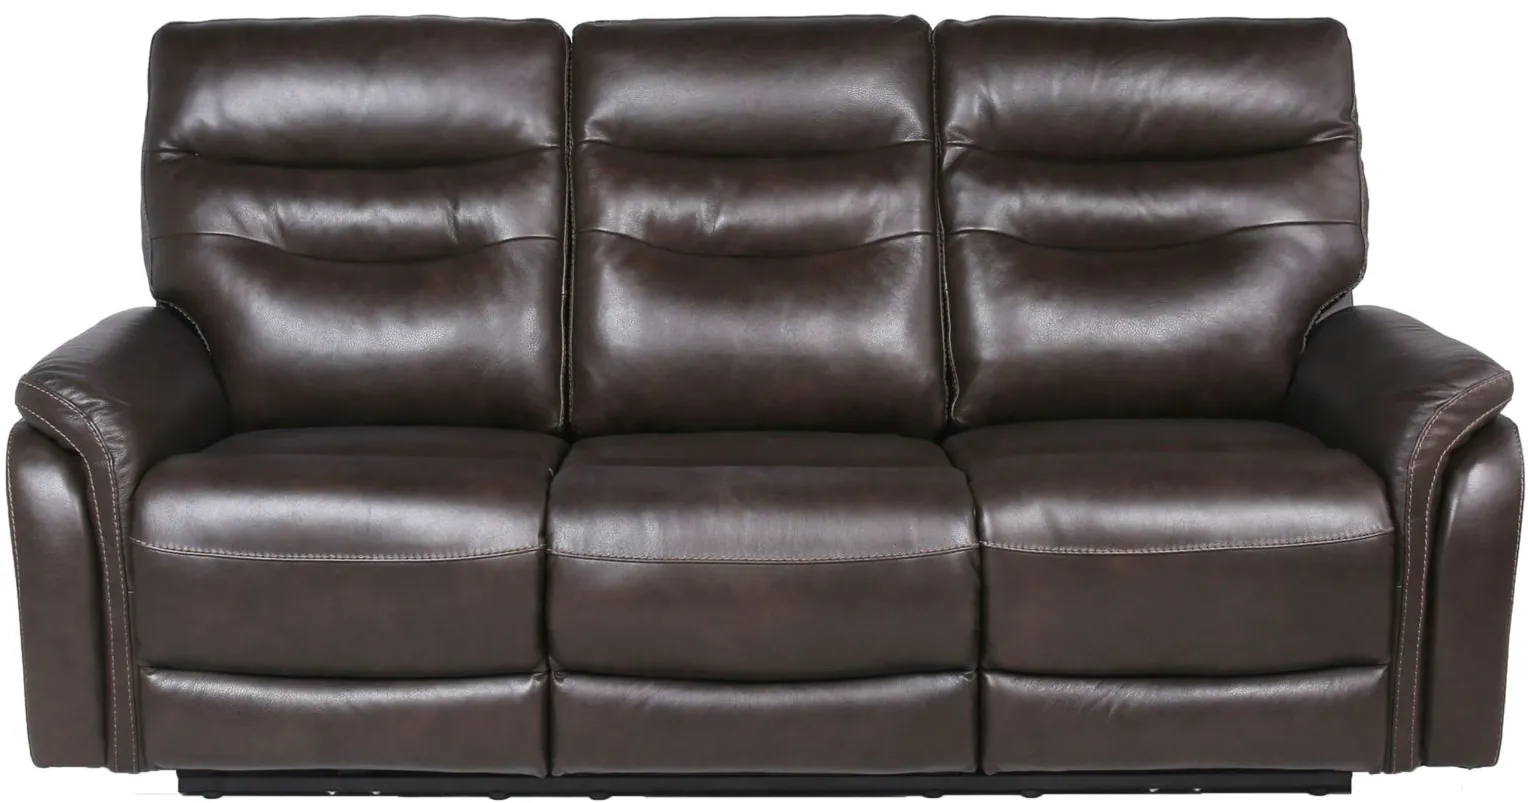 Fortuna Power Recliner Sofa in Dark Brown by Steve Silver Co.